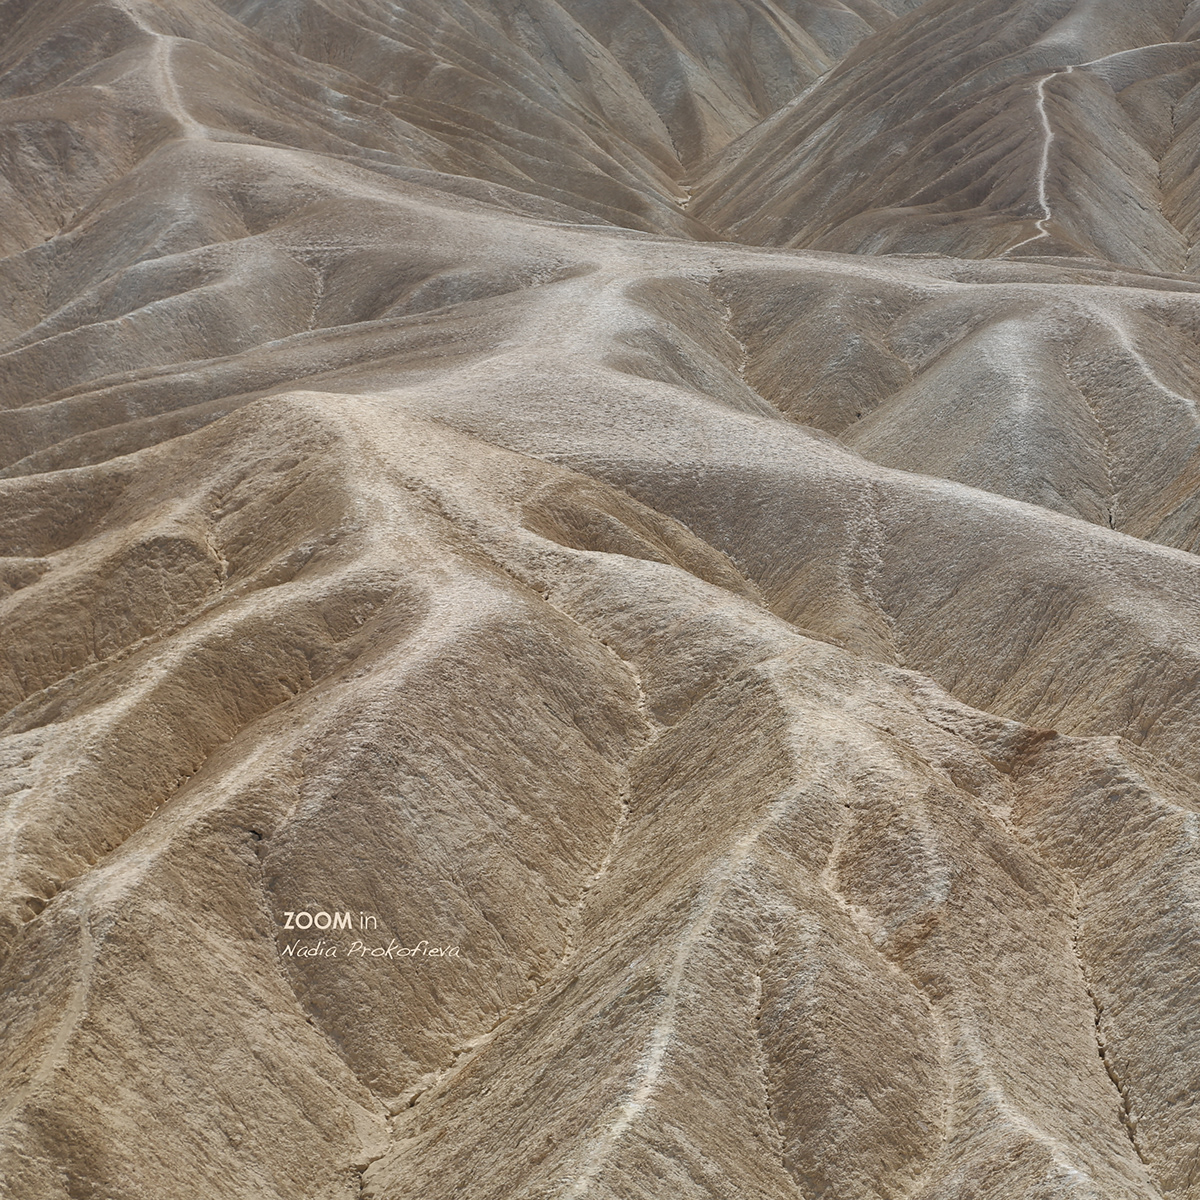 Nature usa California Death Valley hiking wilderness